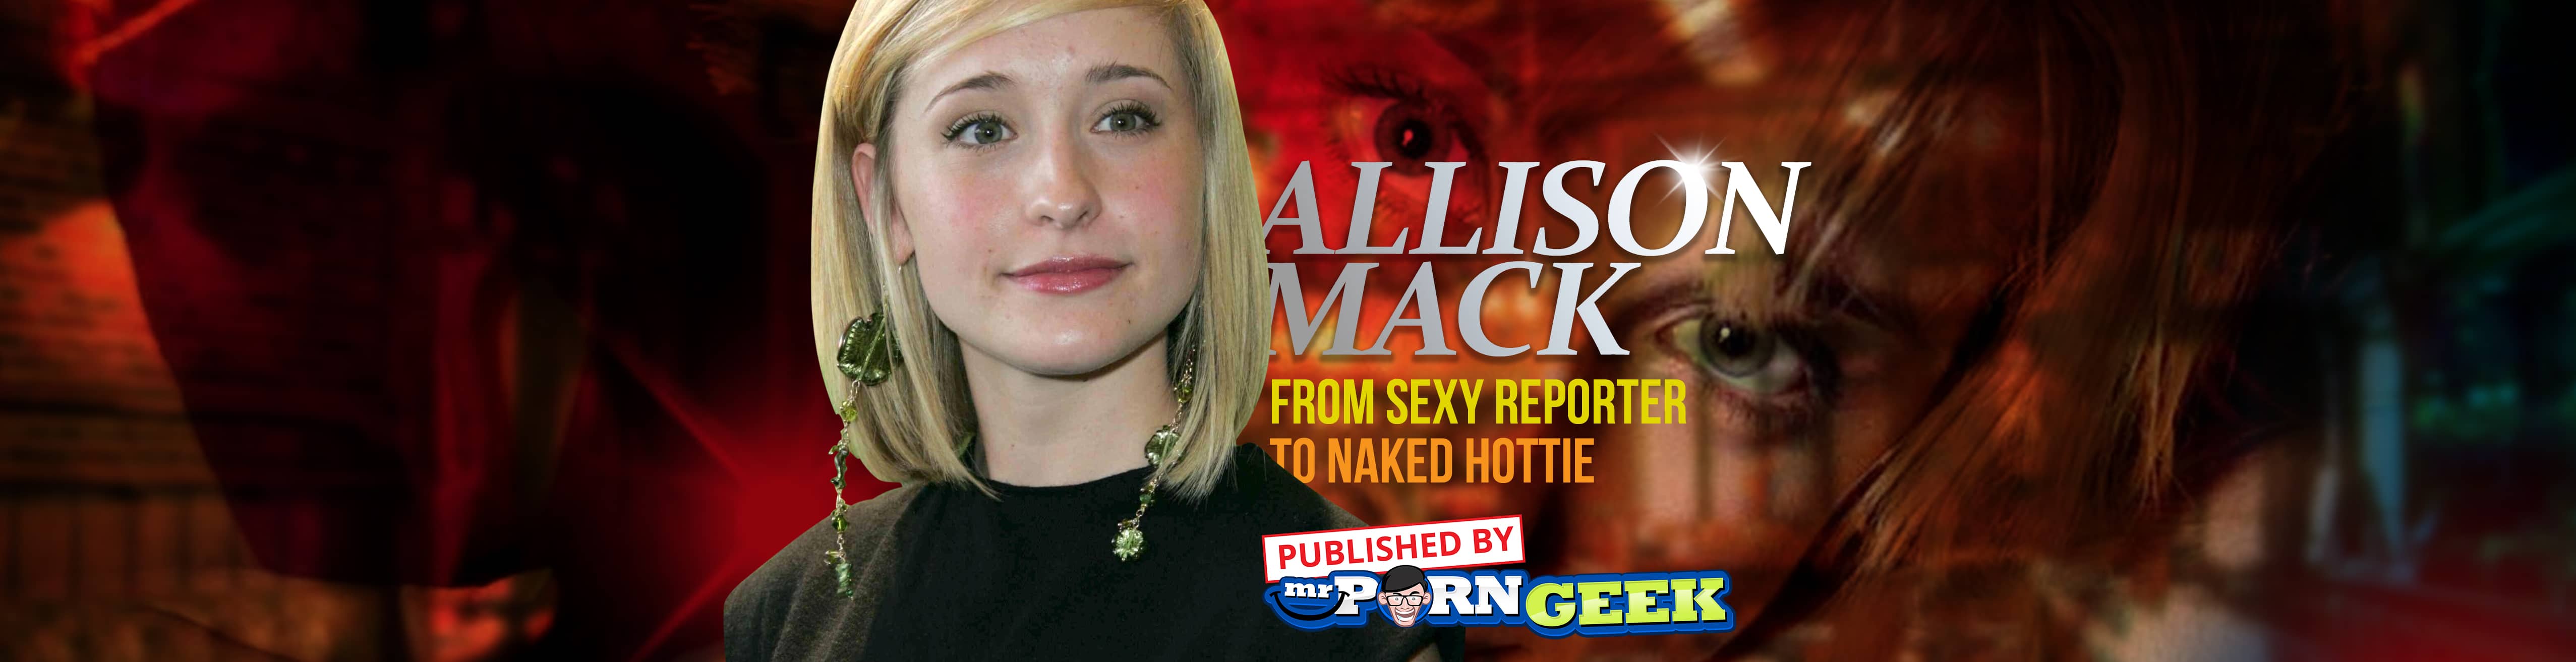 Allison mack fappening